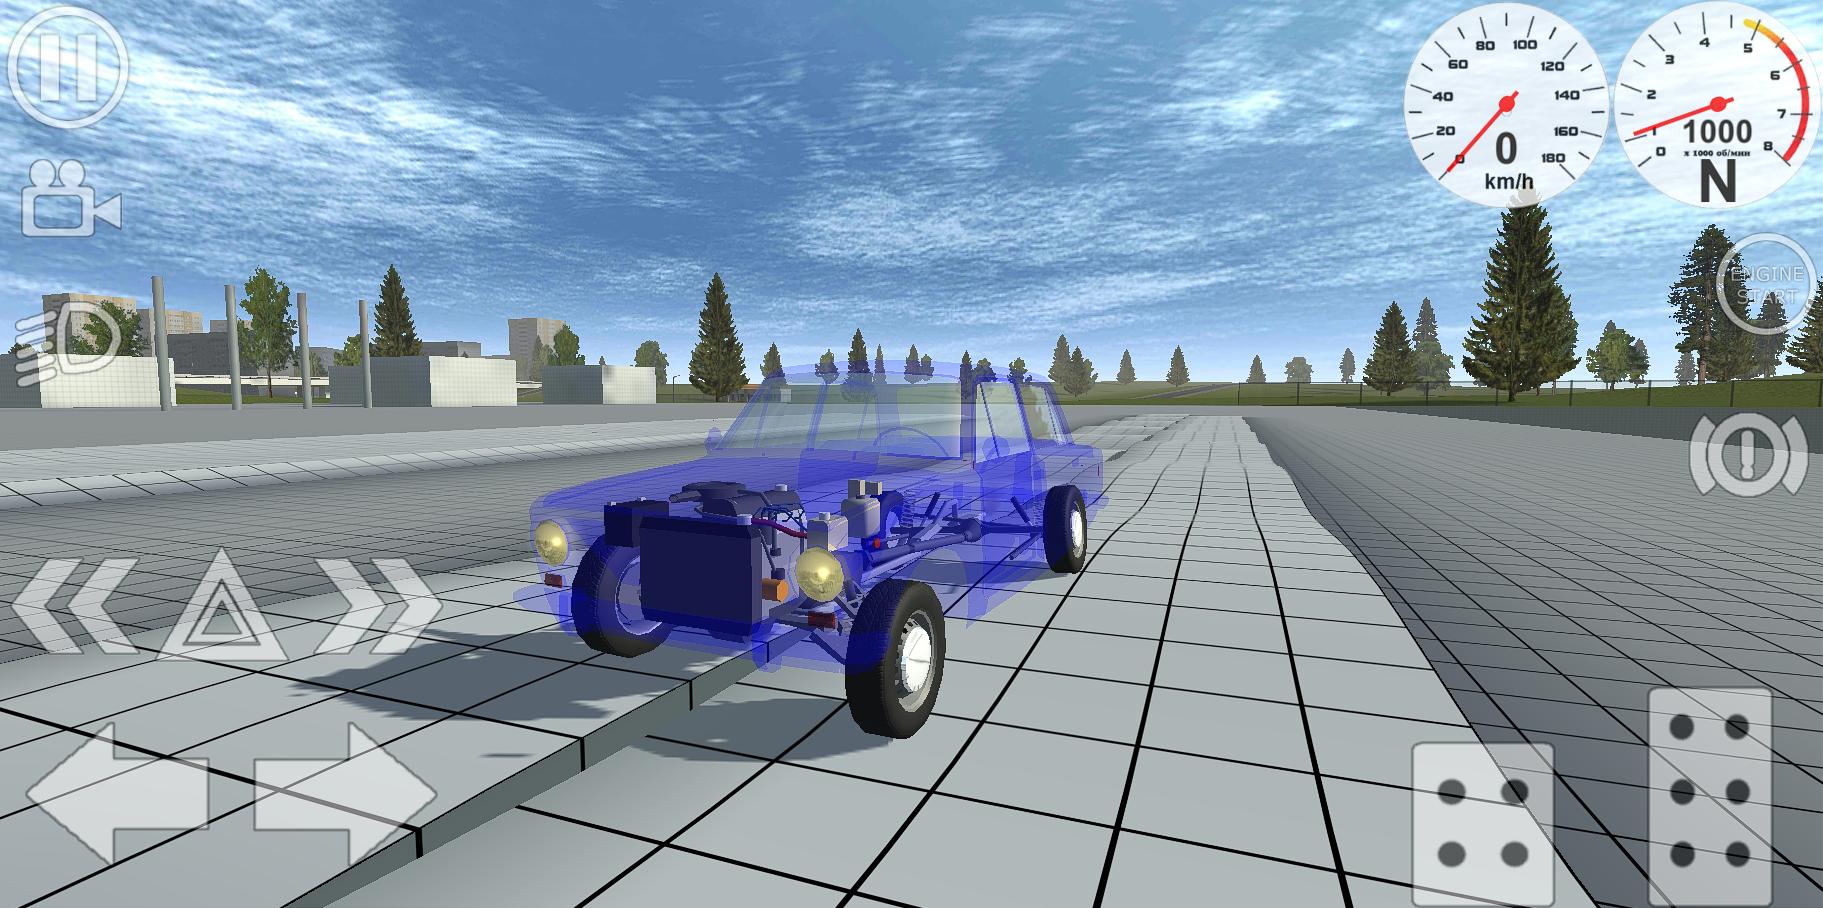 Simple Car Crash Physics Simulator Demo Для Андроид - Скачать APK